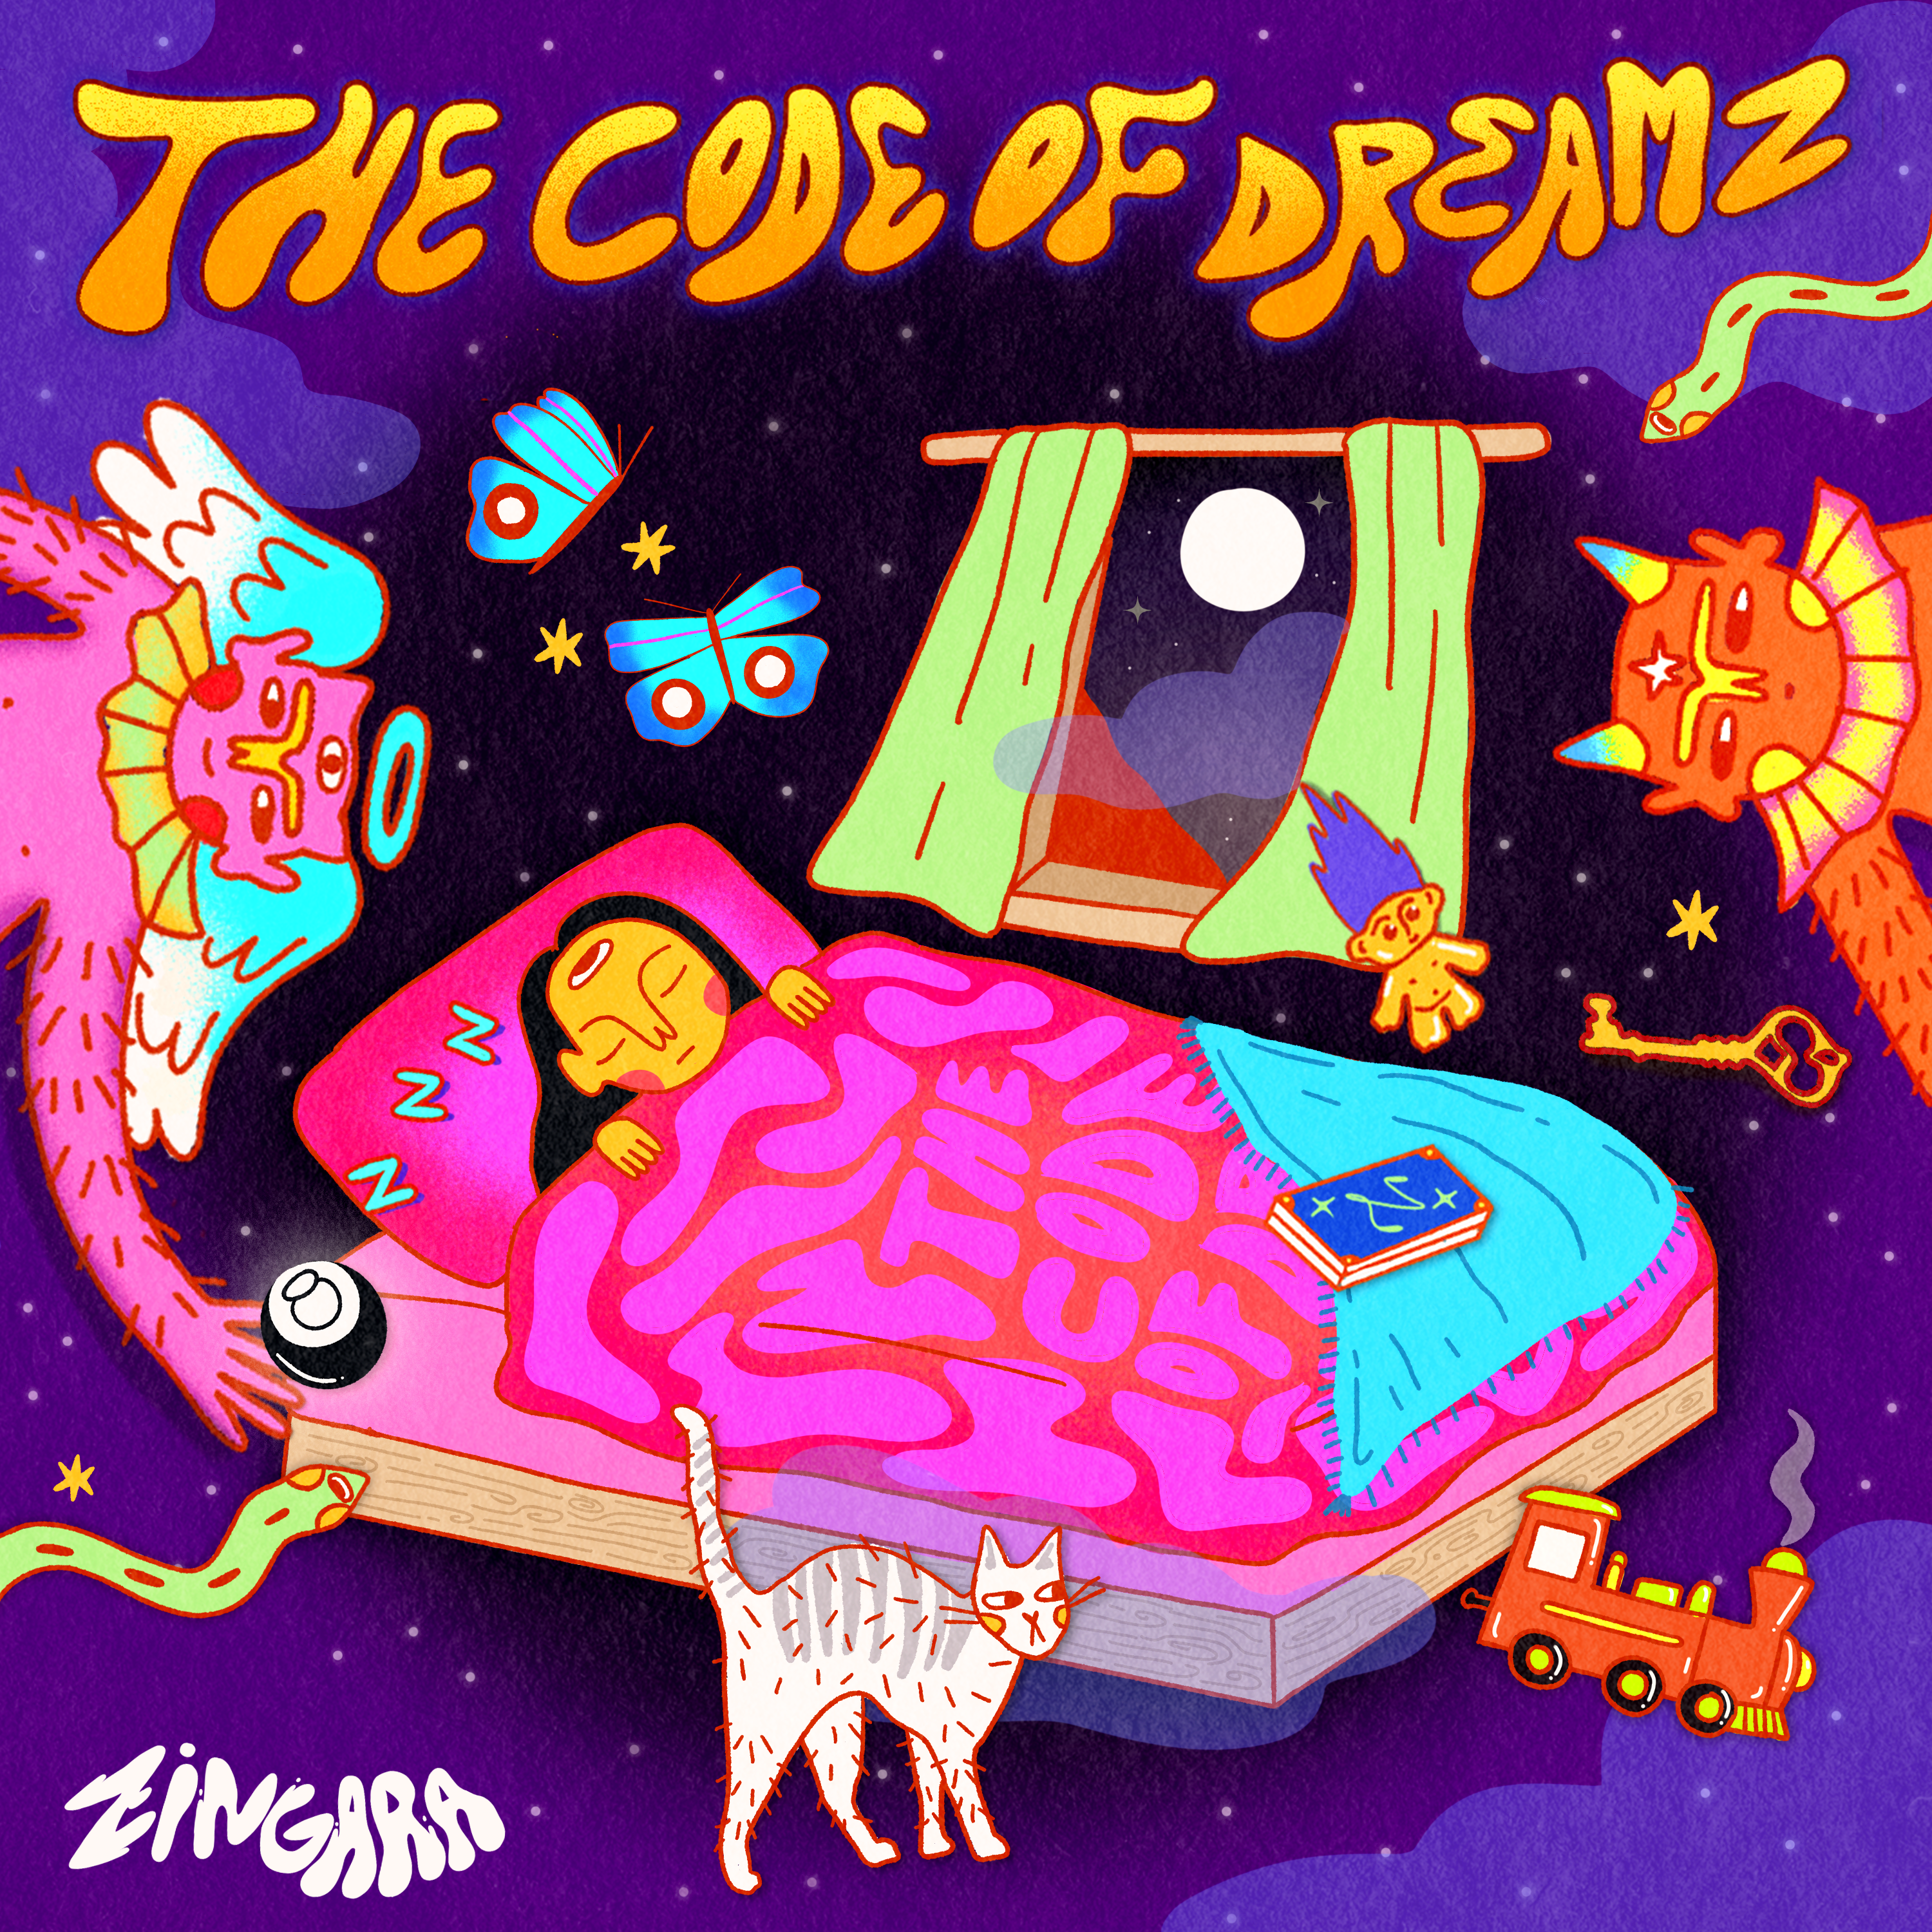 The code of dreamz album art